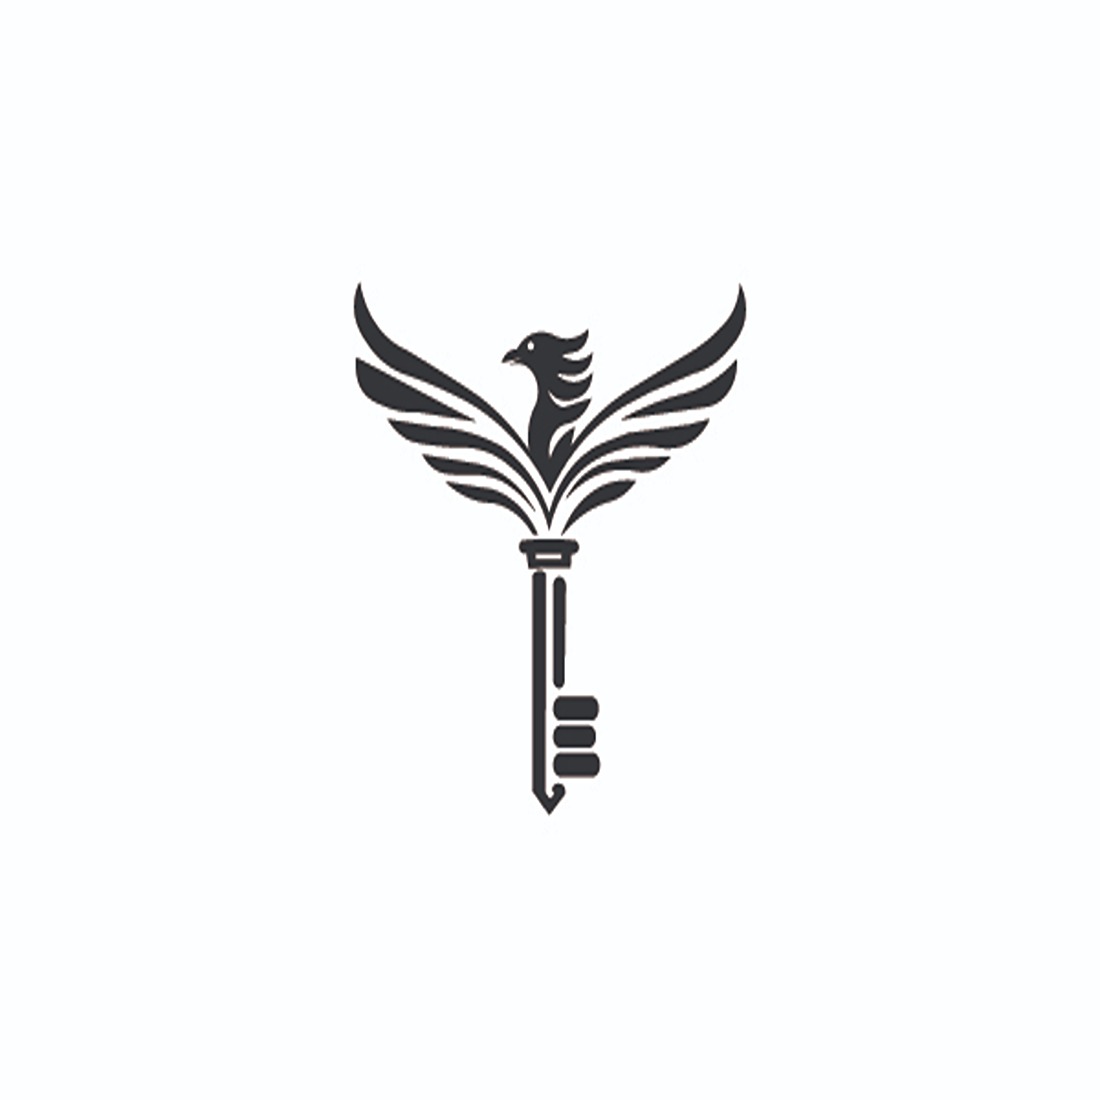 Phoenix - Key Logo Design Template cover image.